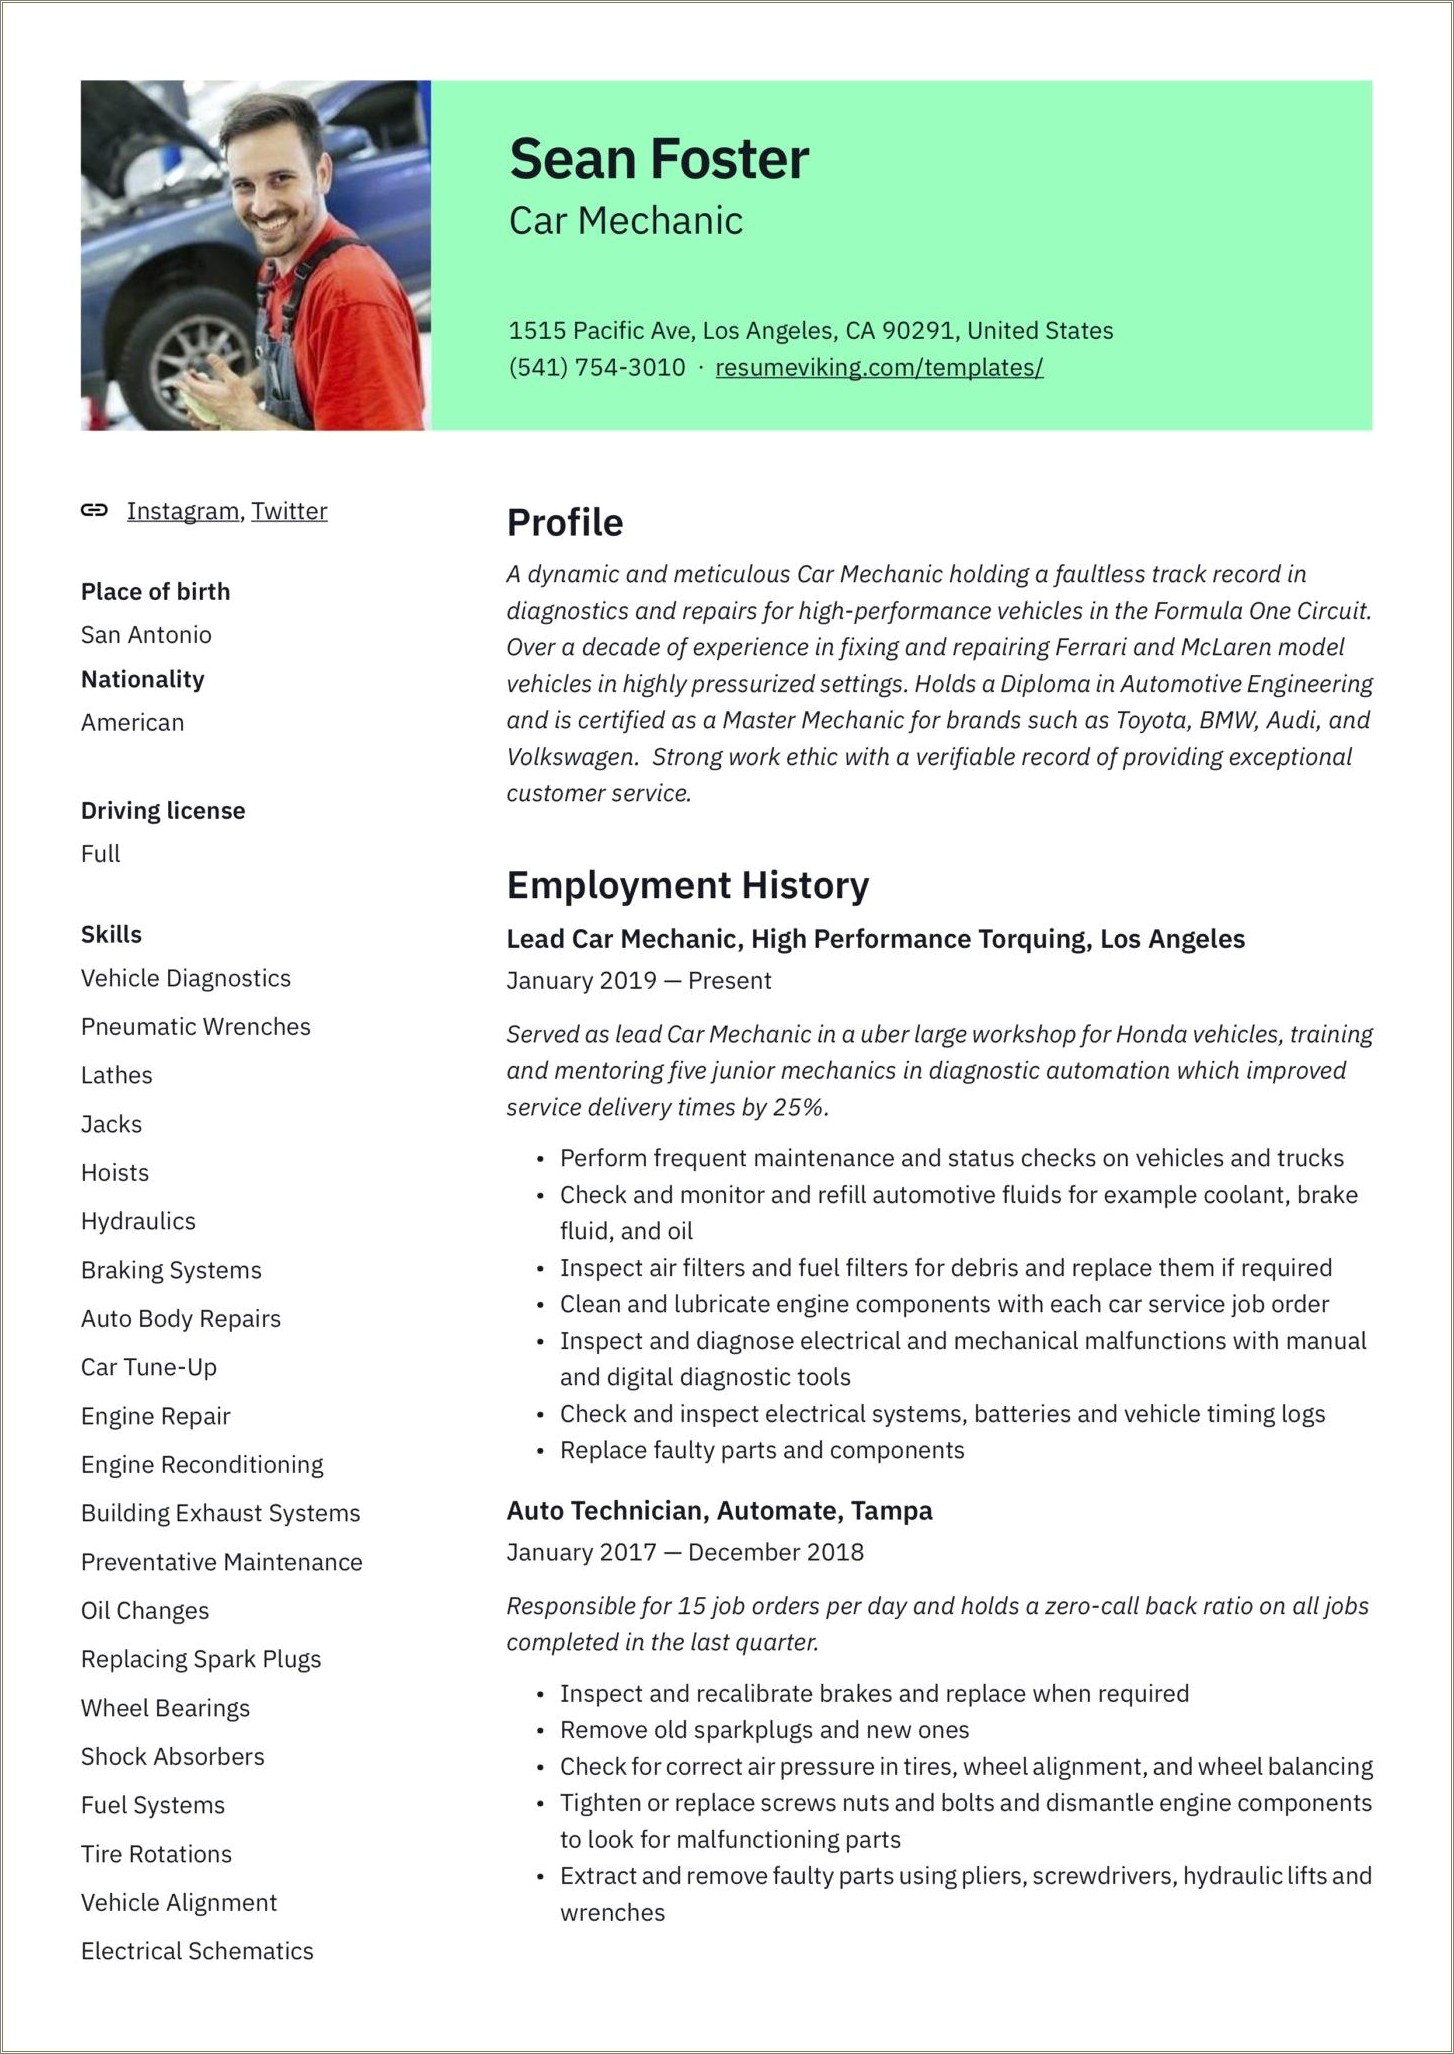 Manufacturing Maintenance Technician Job Description For Resume